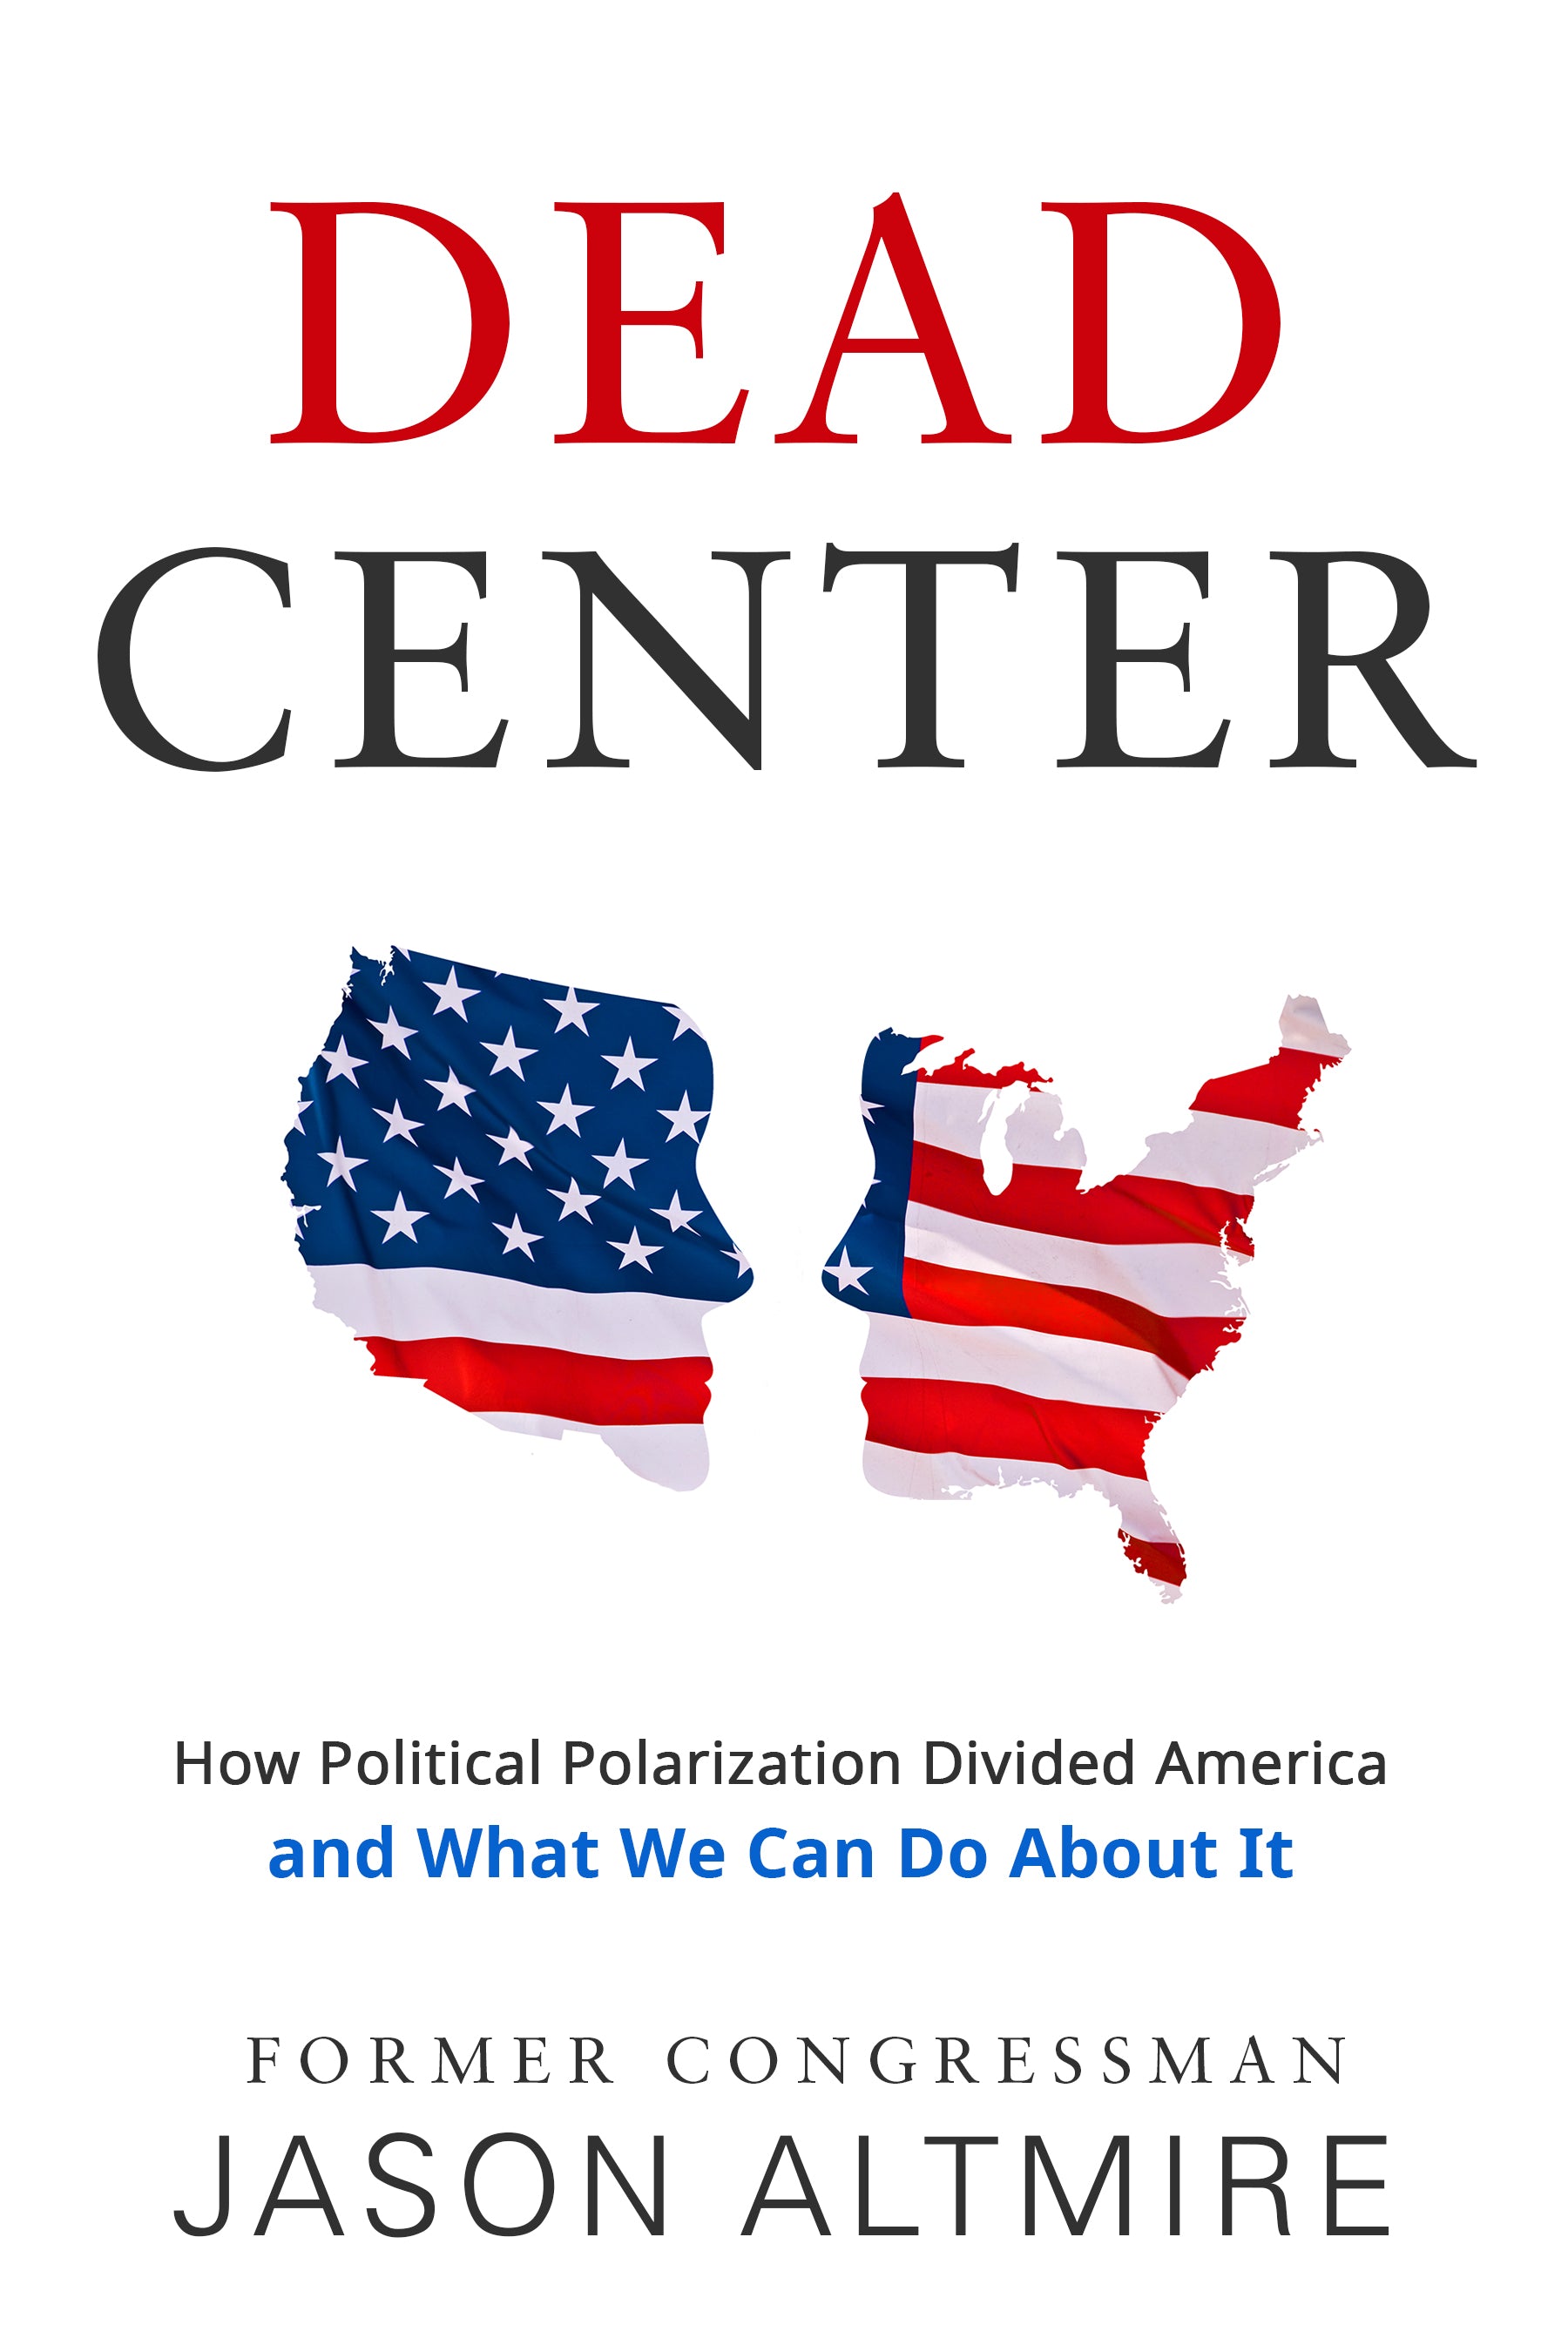 Former Congressman Jason Altmire’s “Dead Center” “fivepeats” as the Sunbury Press bestseller for December